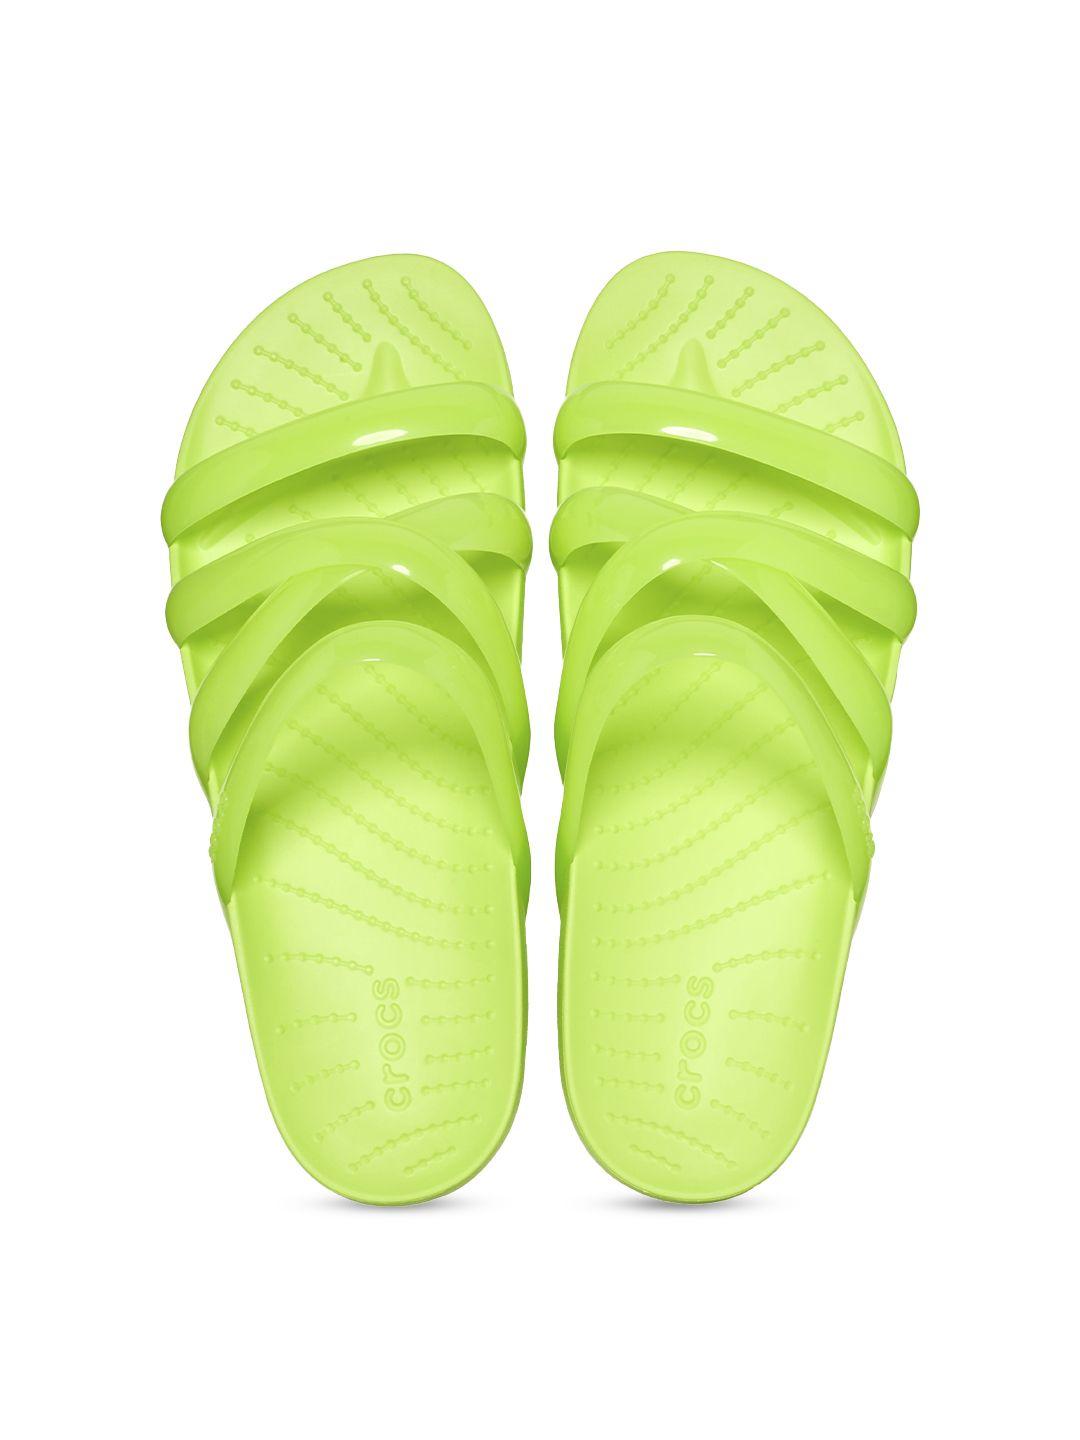 crocs women textured open toe flats